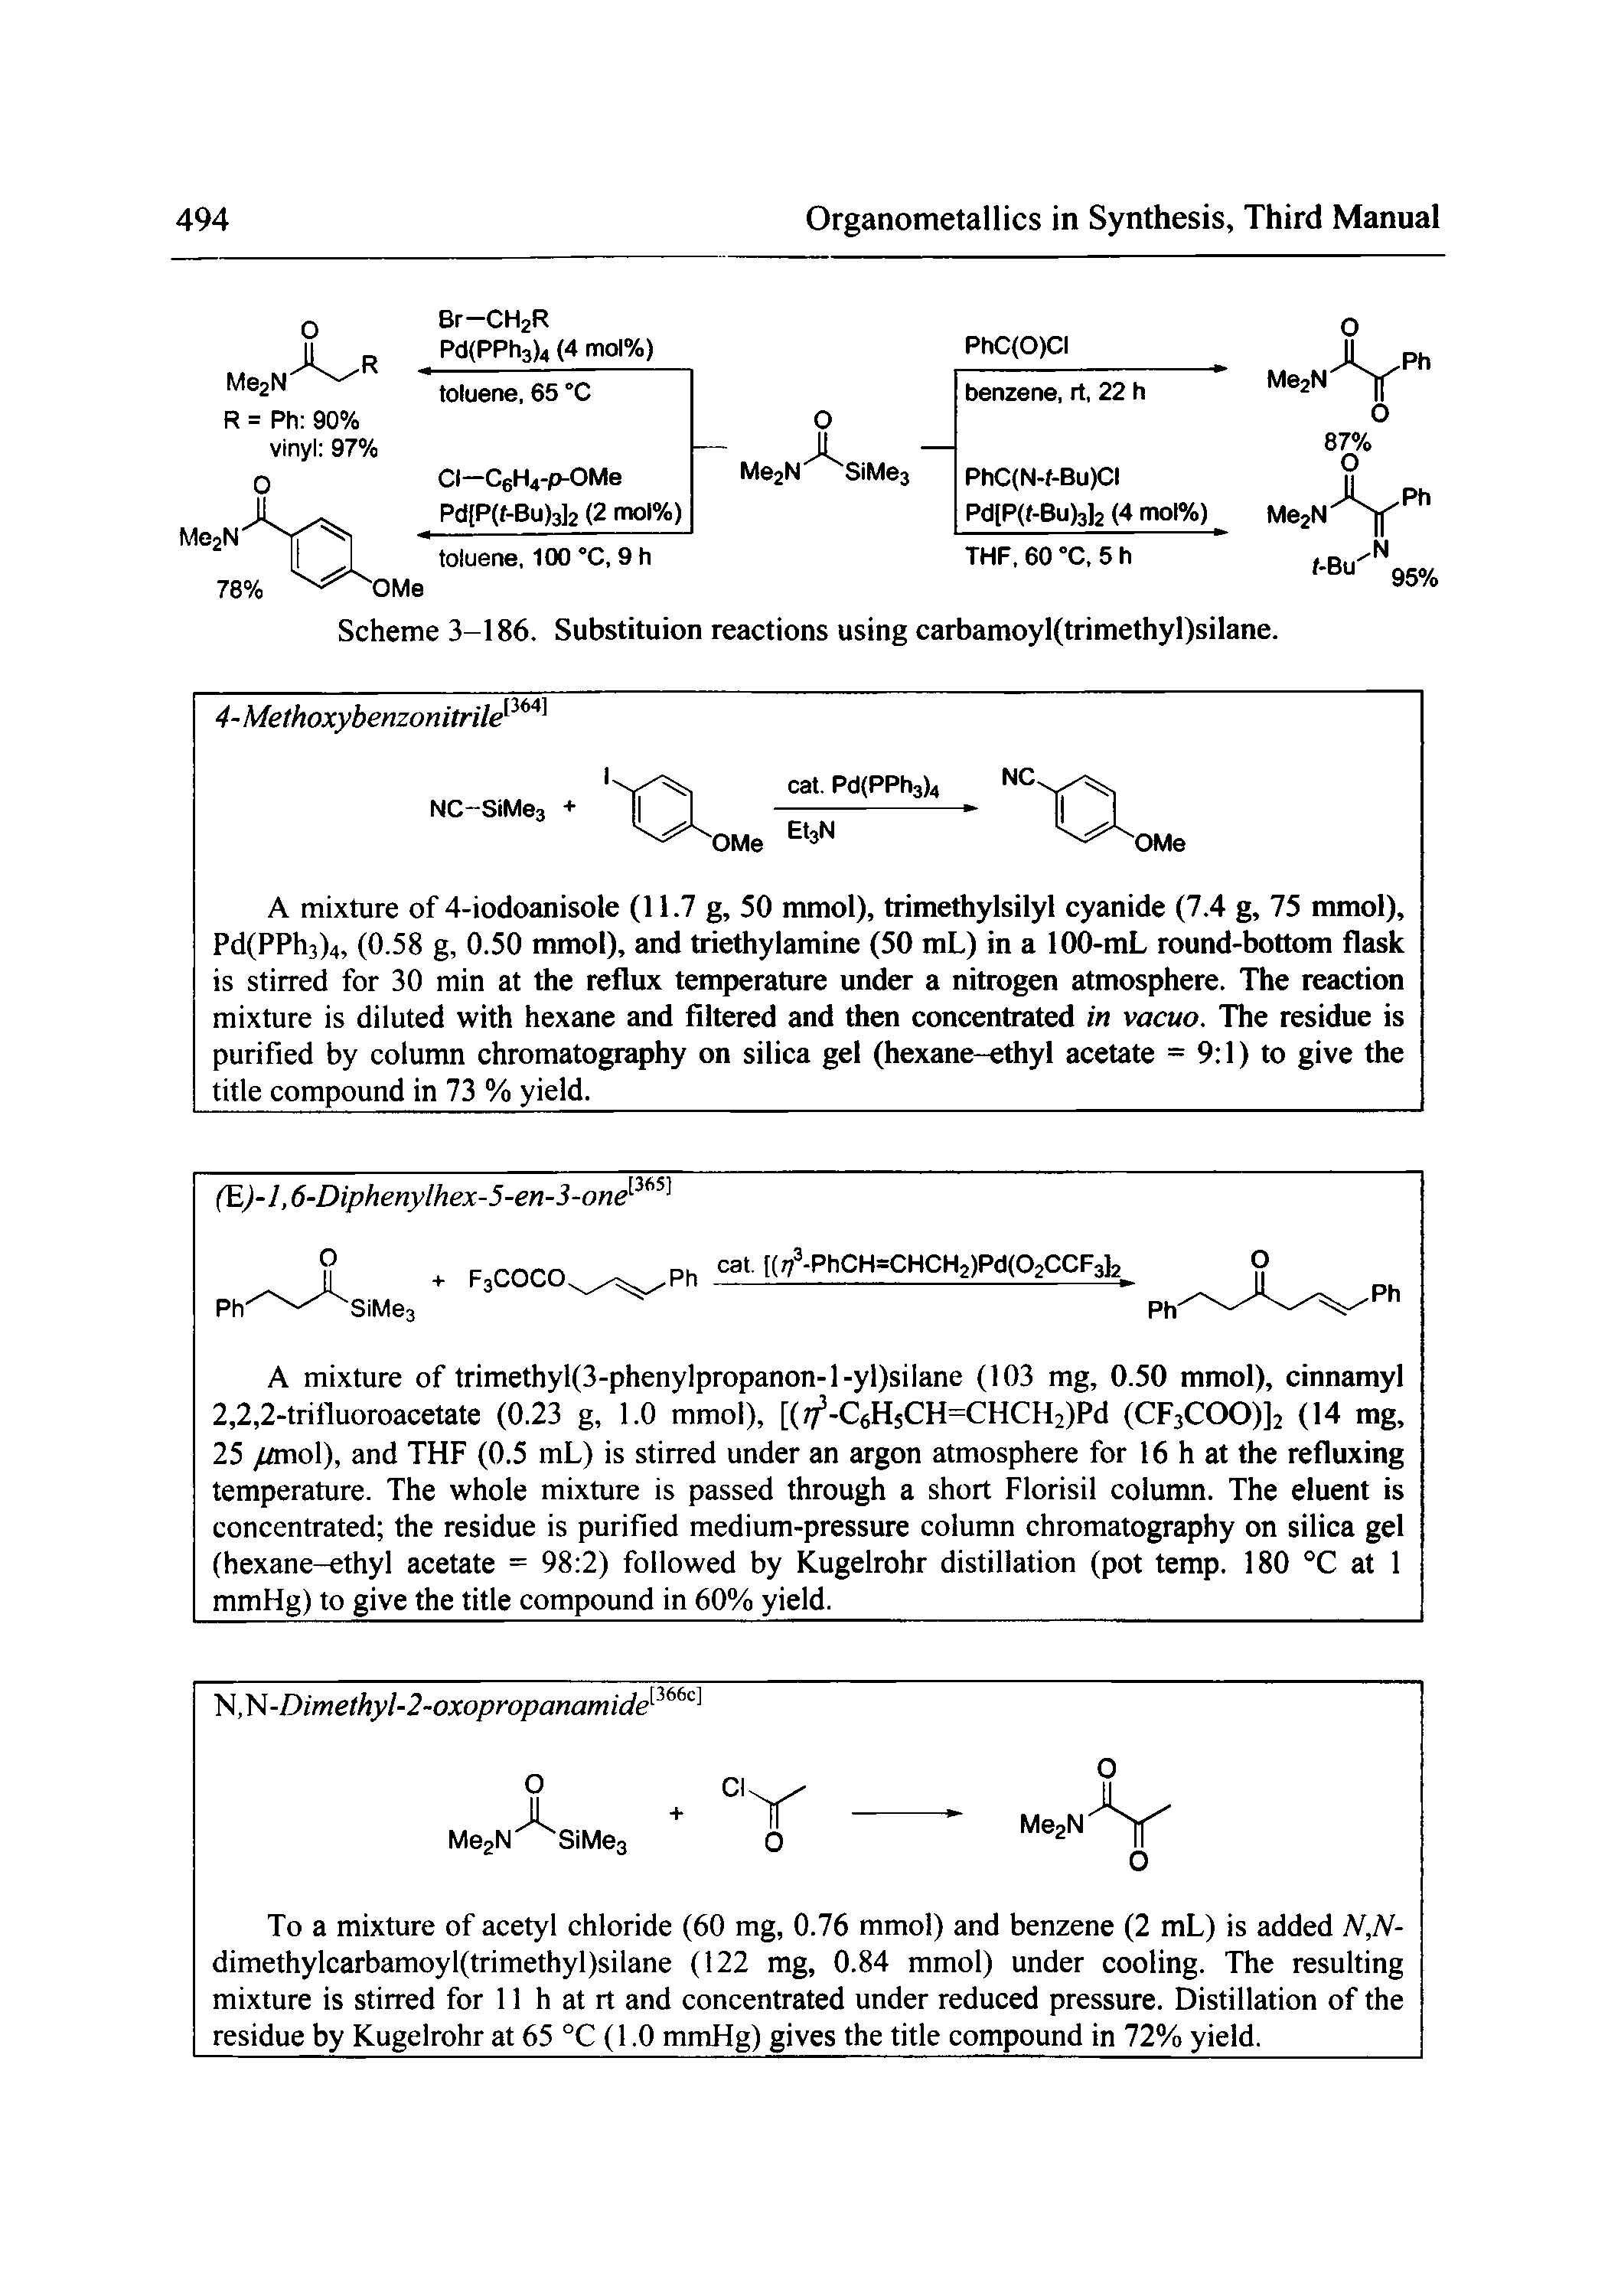 Scheme 3-186. Substituion reactions using carbamoyl(trimethyl)silane.